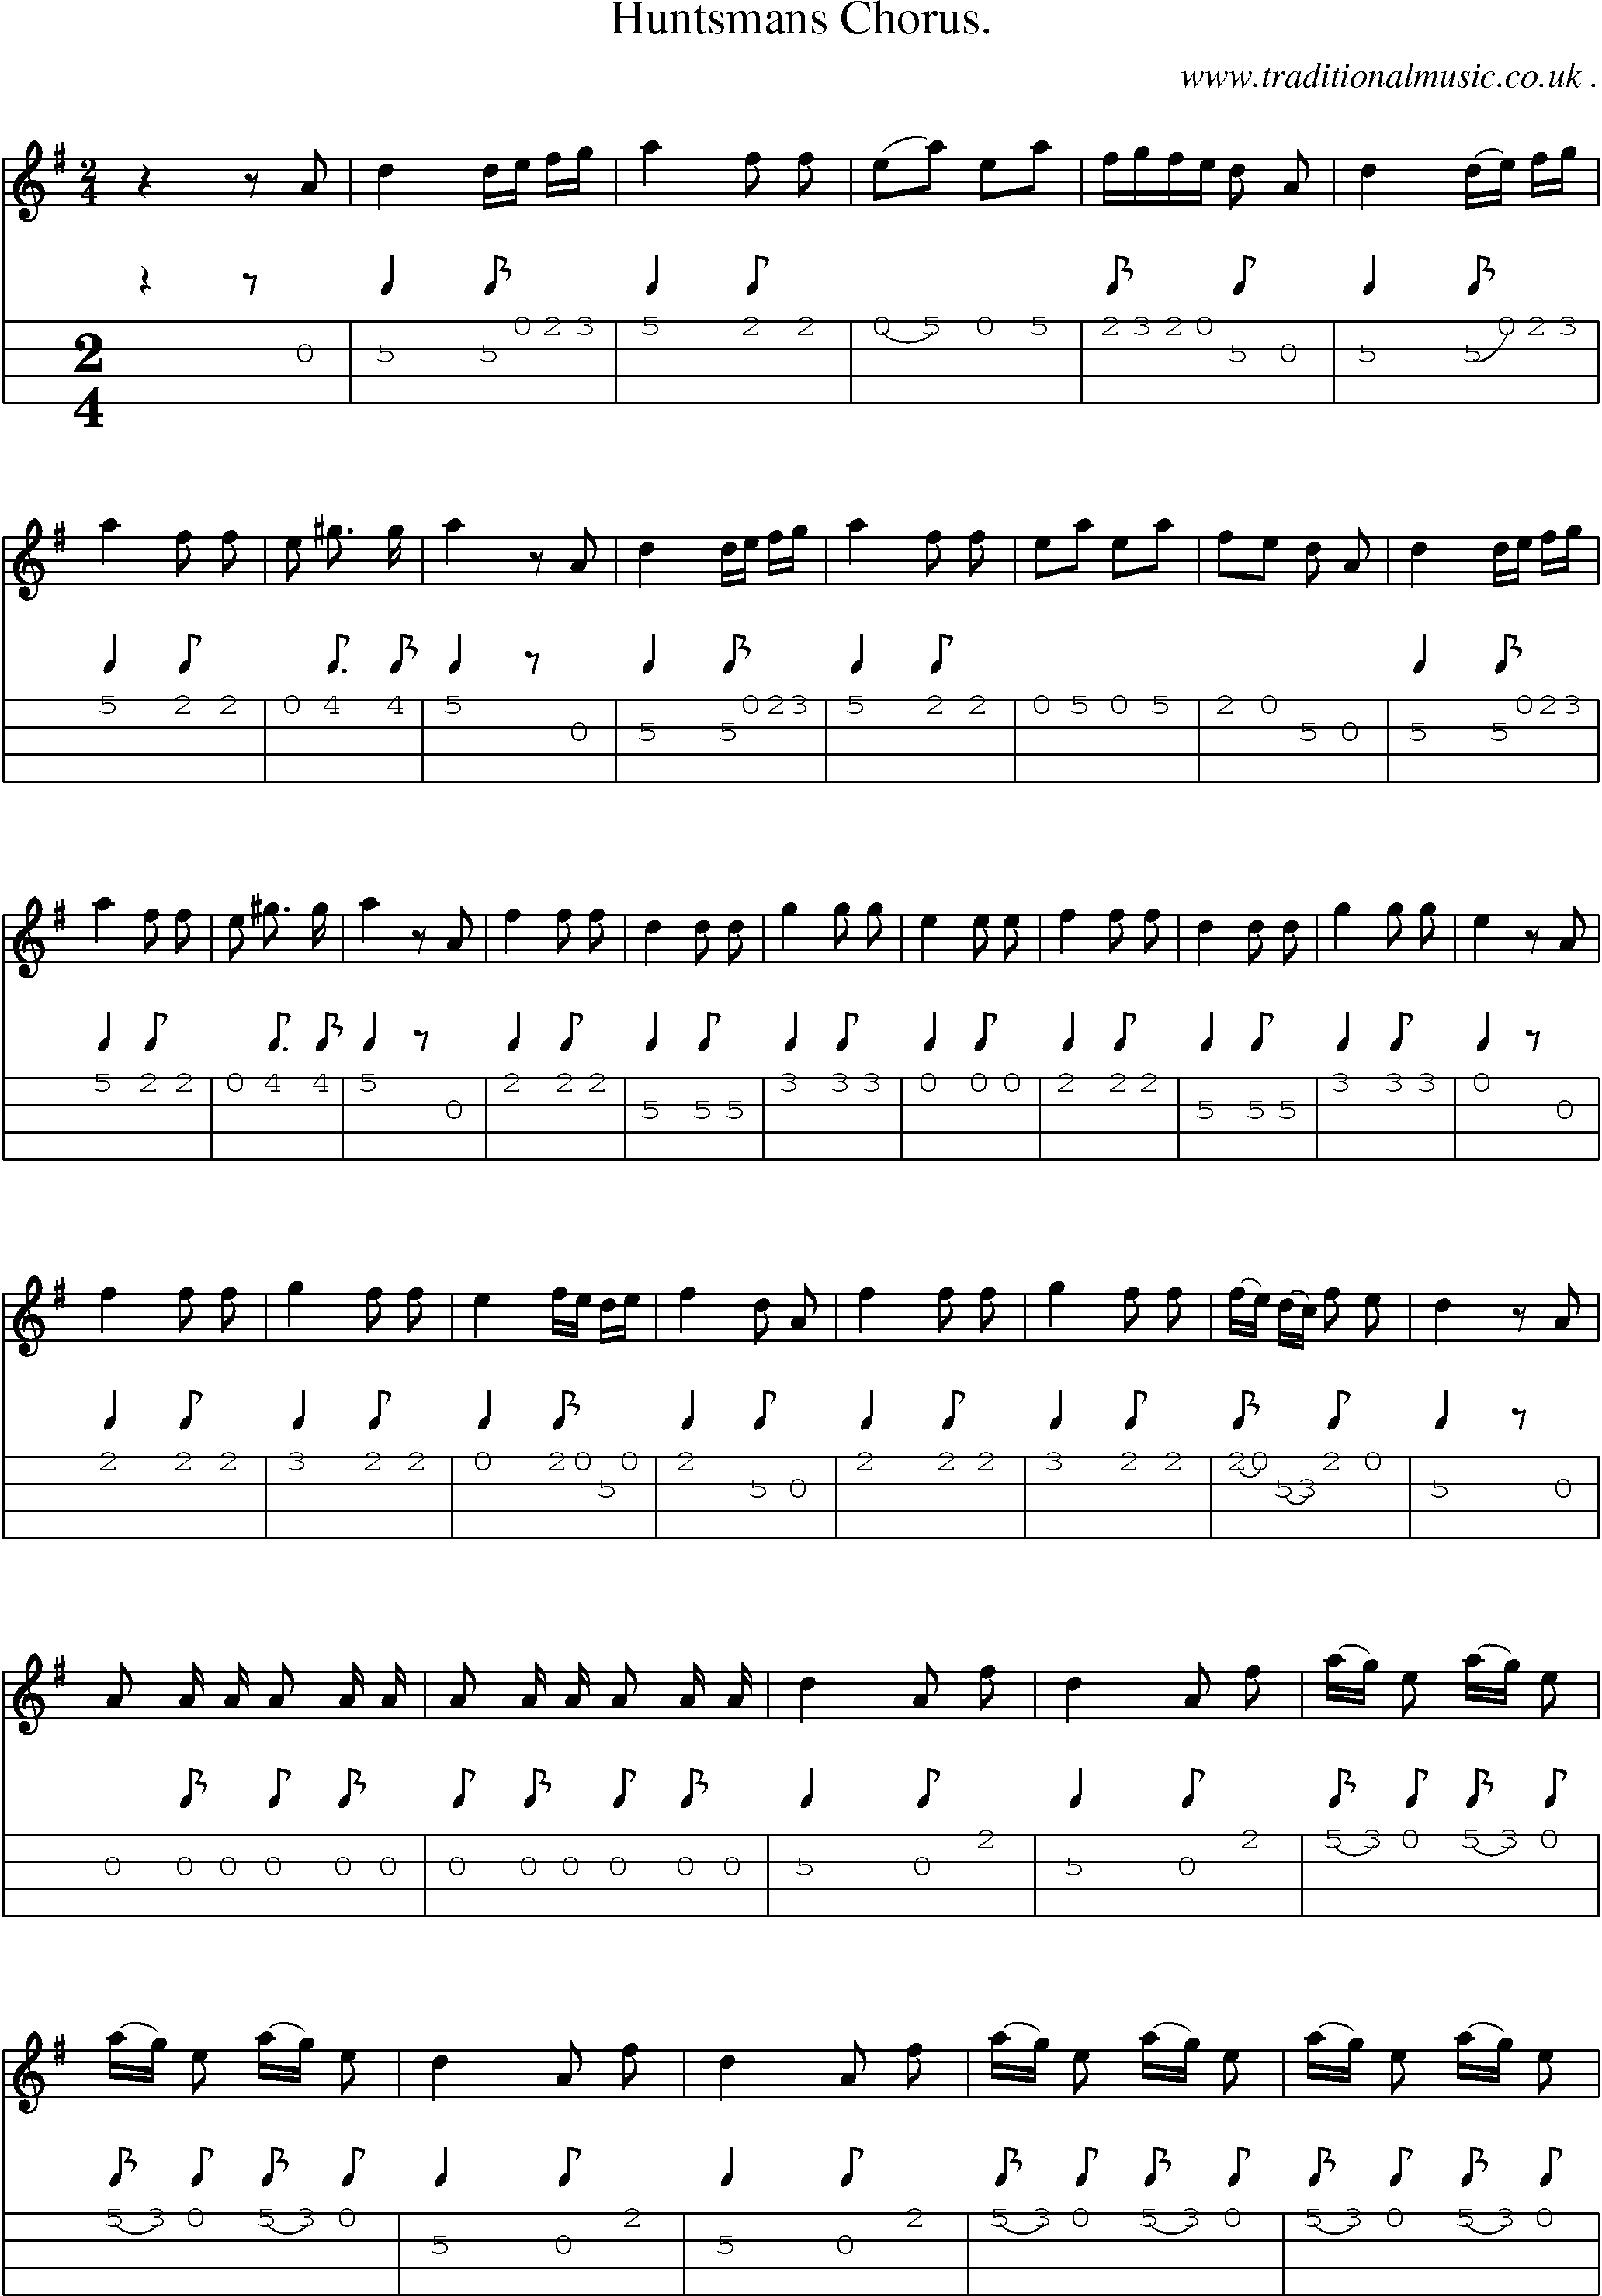 Sheet-Music and Mandolin Tabs for Huntsmans Chorus